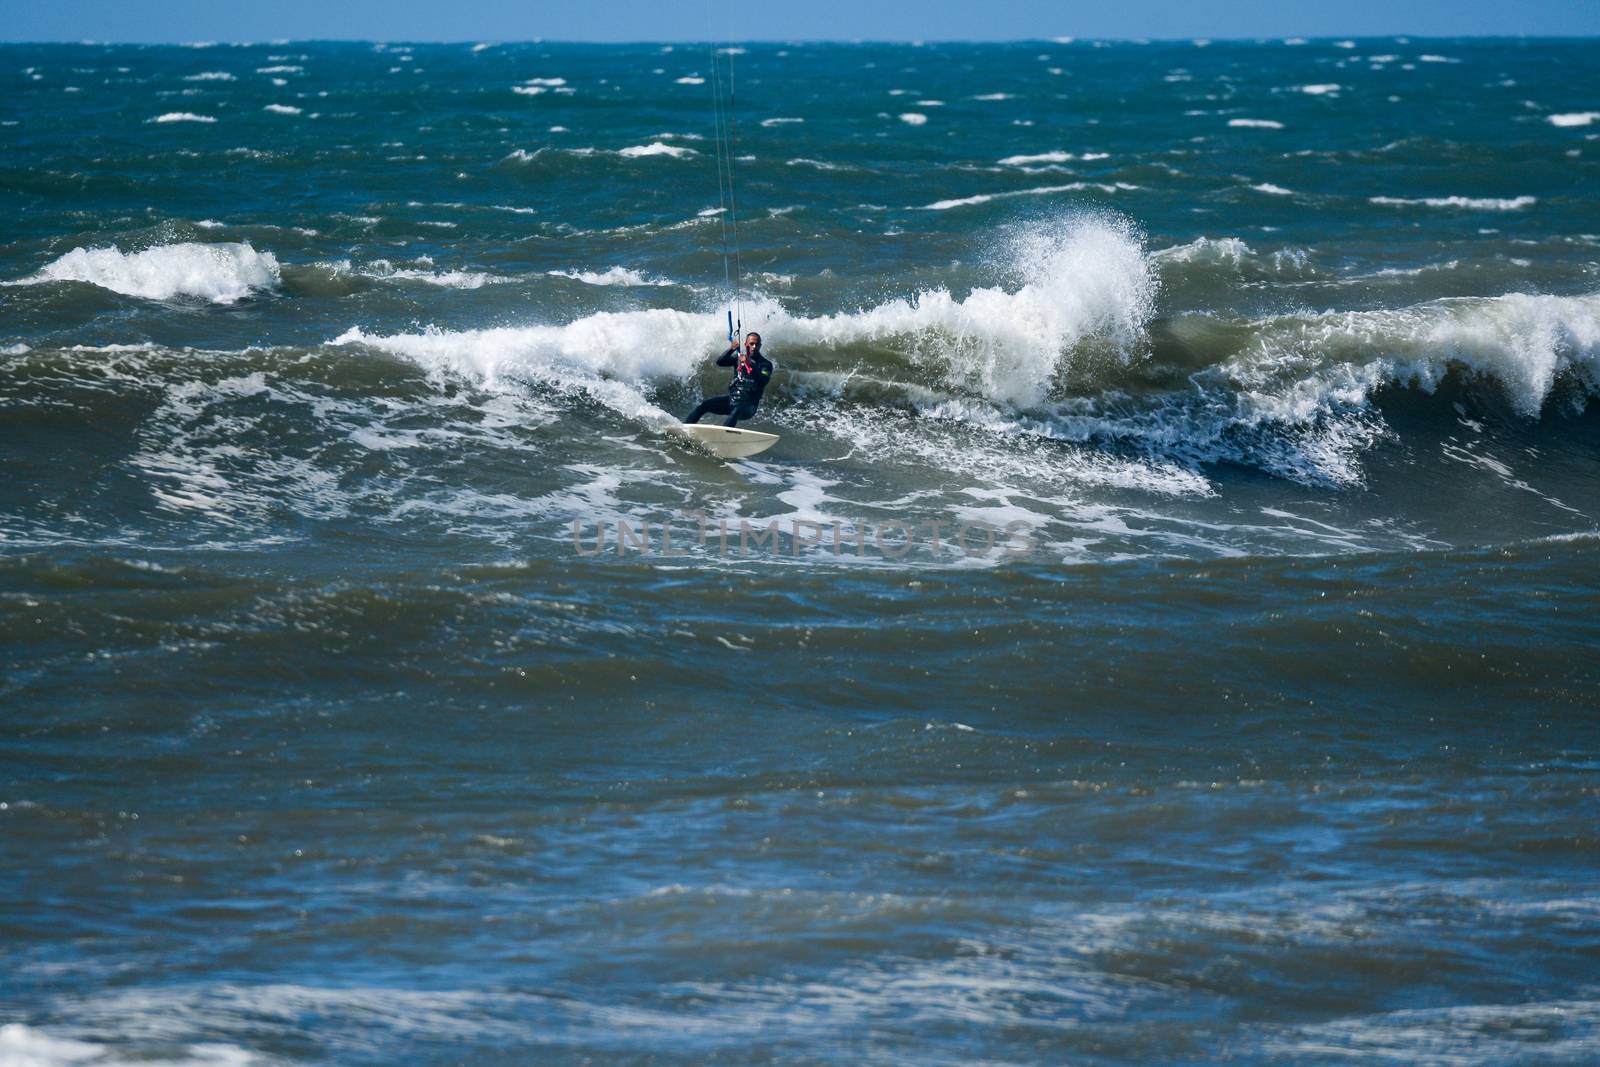 Kitesurfer riding ocean waves on a bright sunny day.